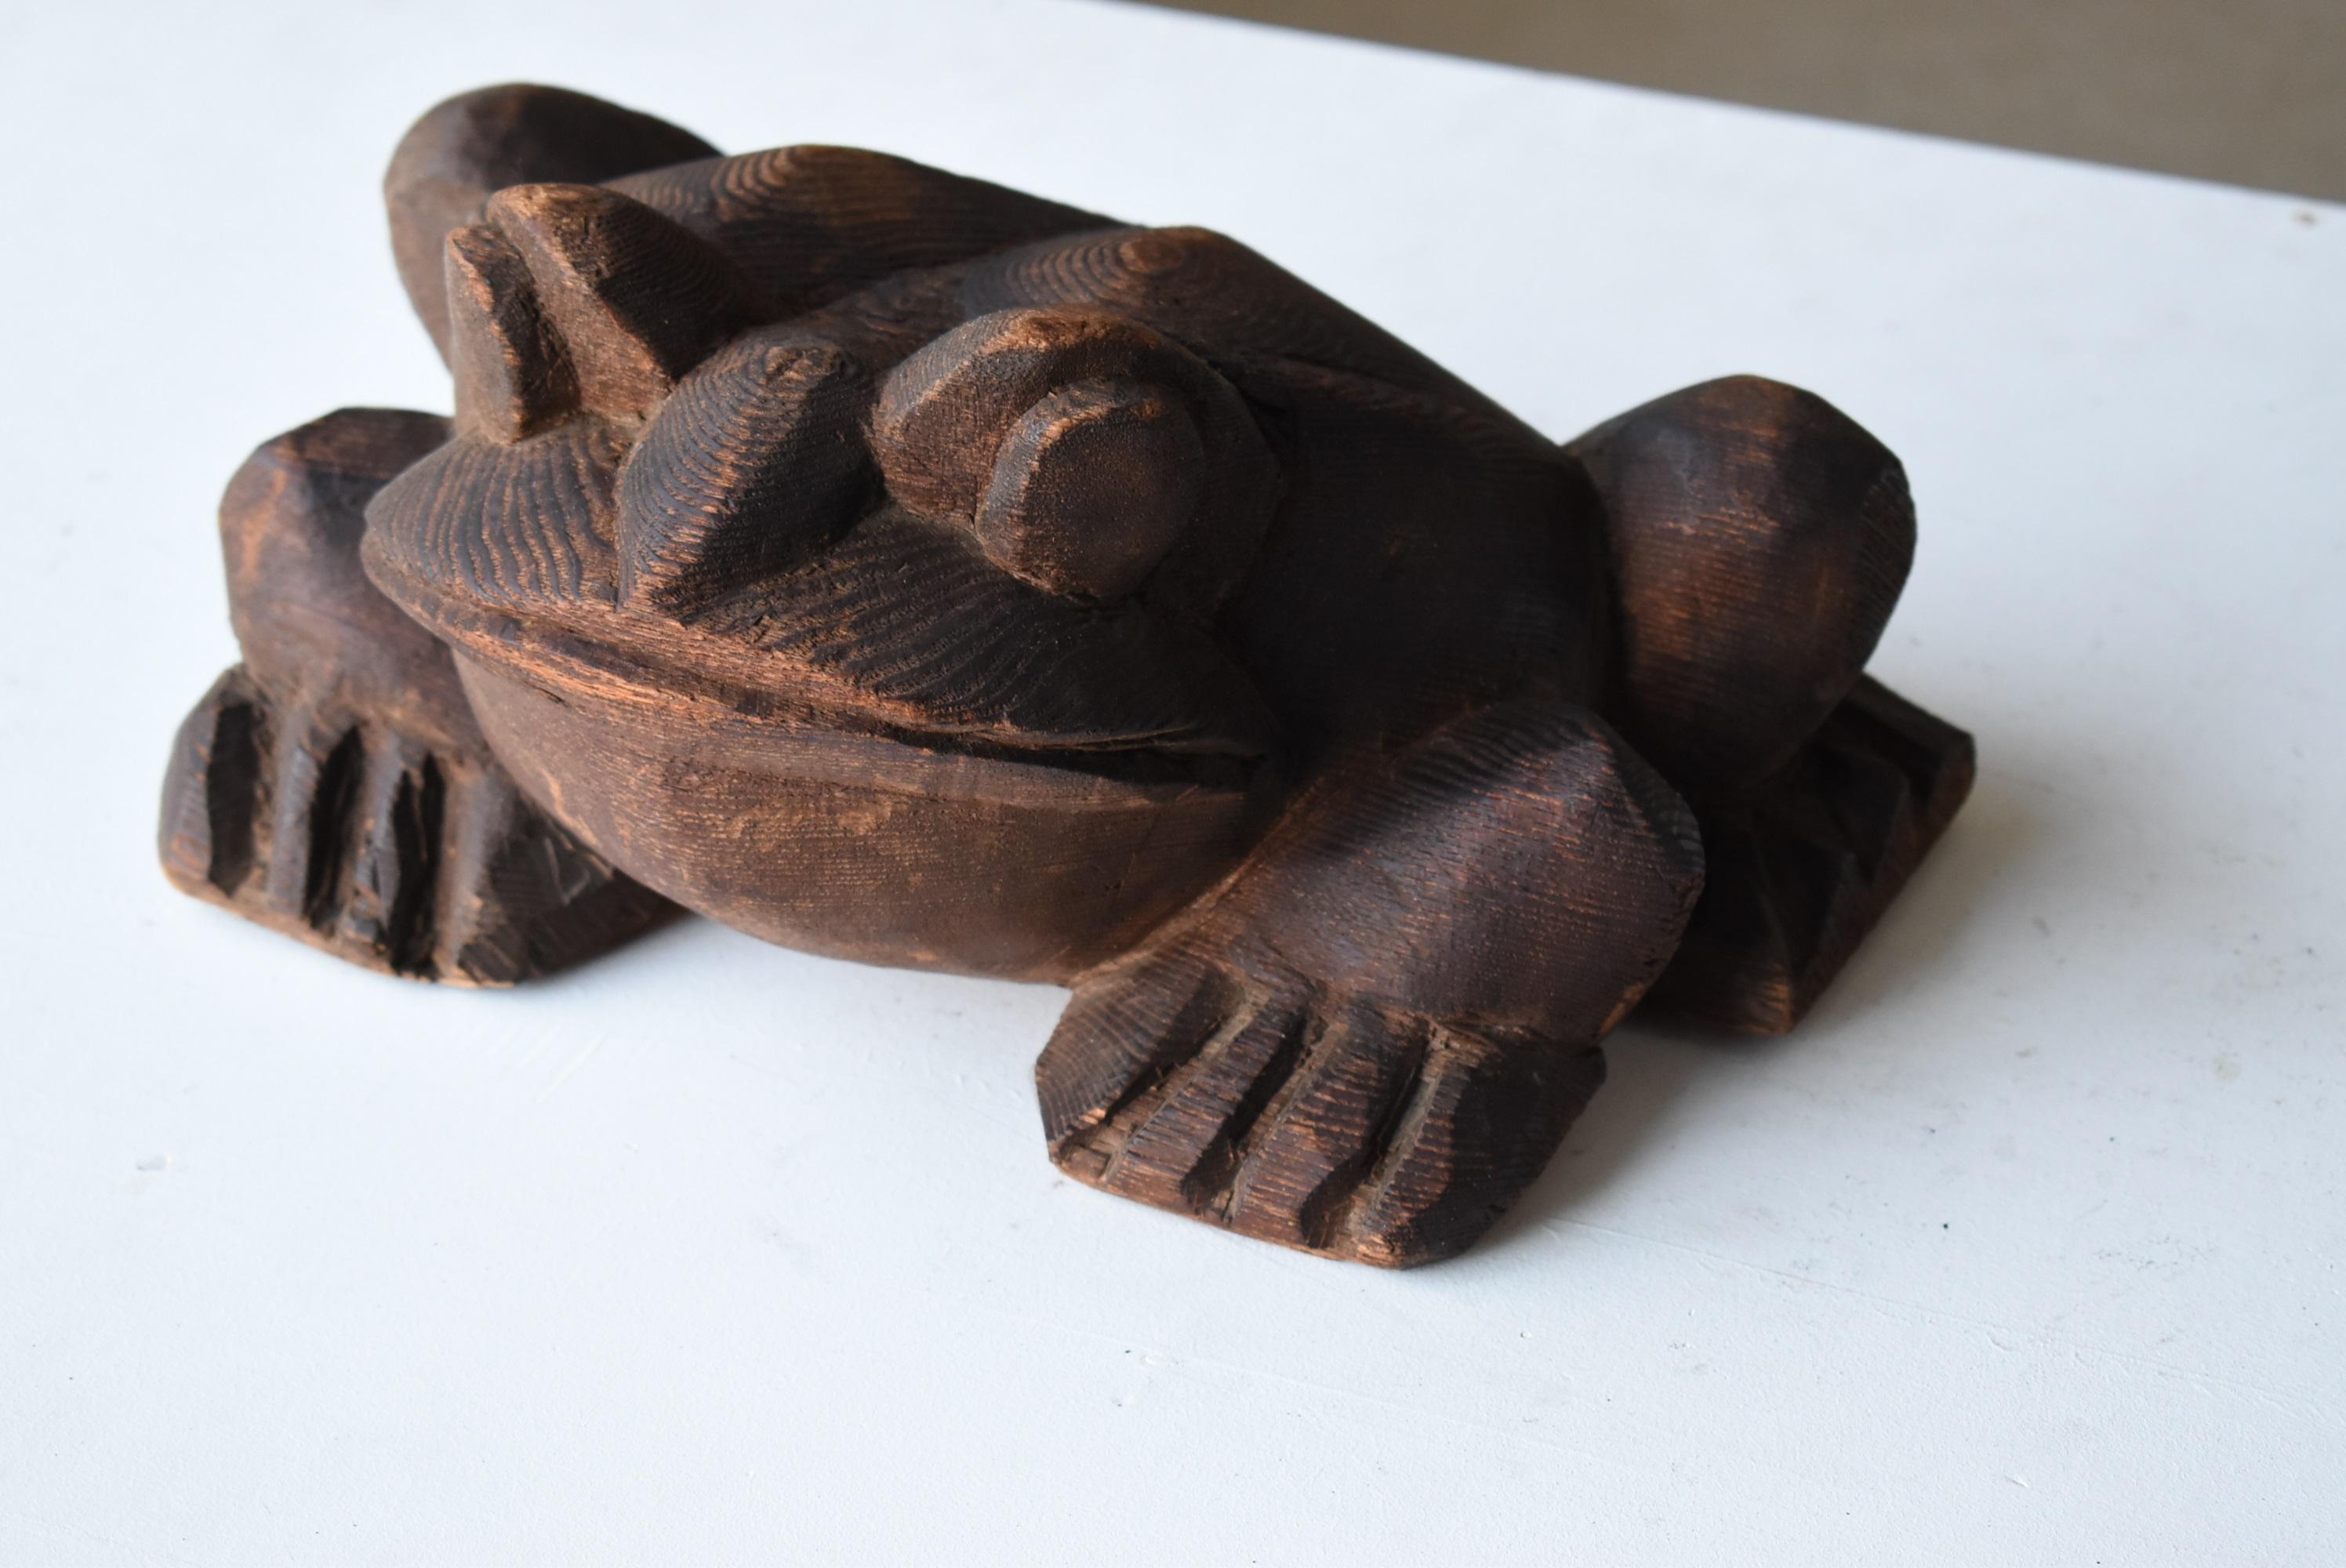 Japanese Antique Wood Carving Frog 1900s-1930s/Folk Art Mingei Wabisabi Object 2